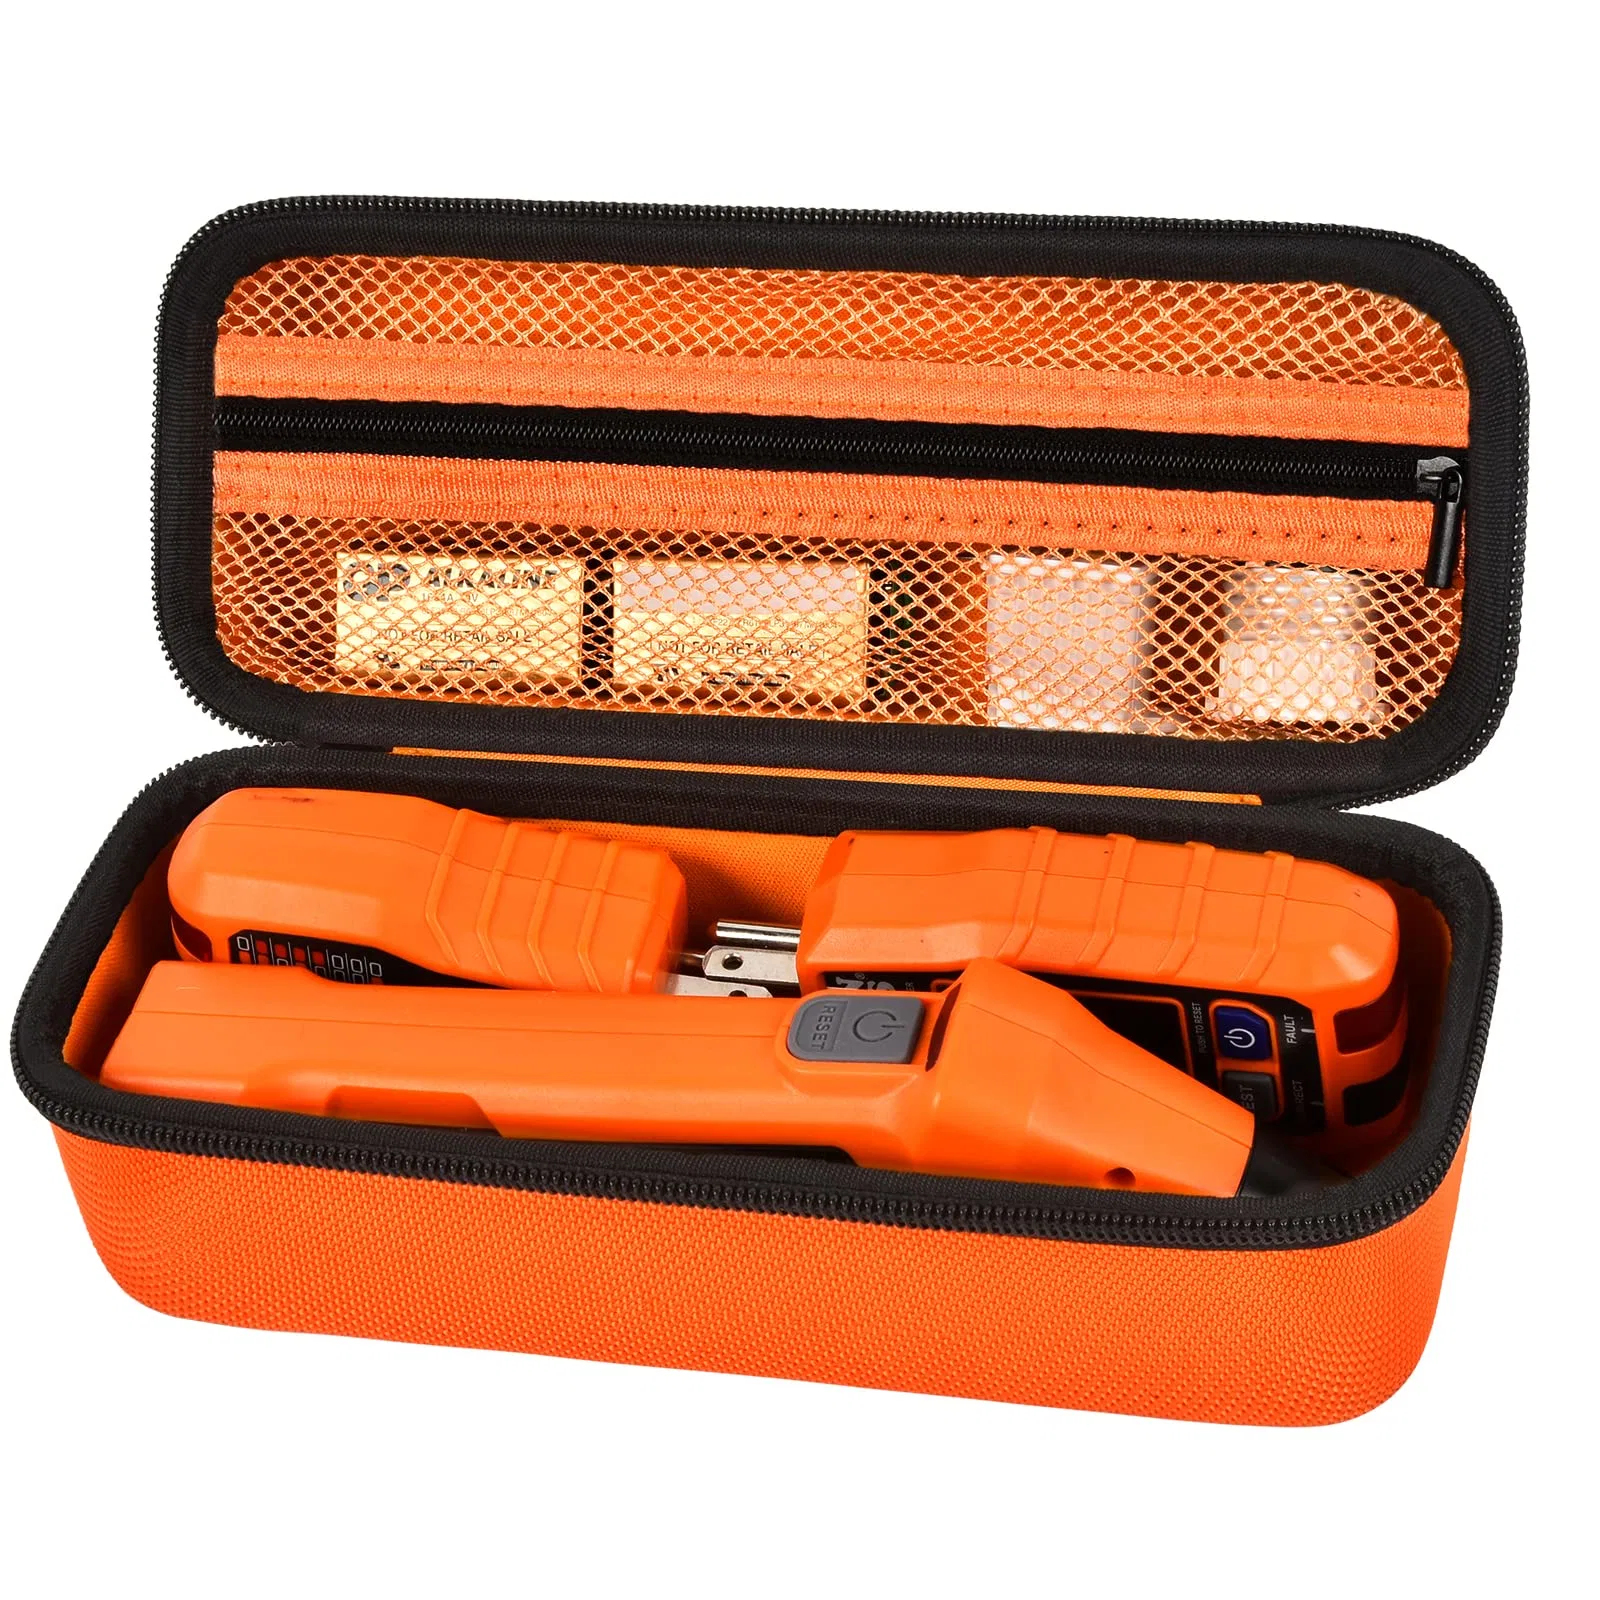 Kit Case Compatible with Klein Circuit Breaker Finder Tools Storage Bag